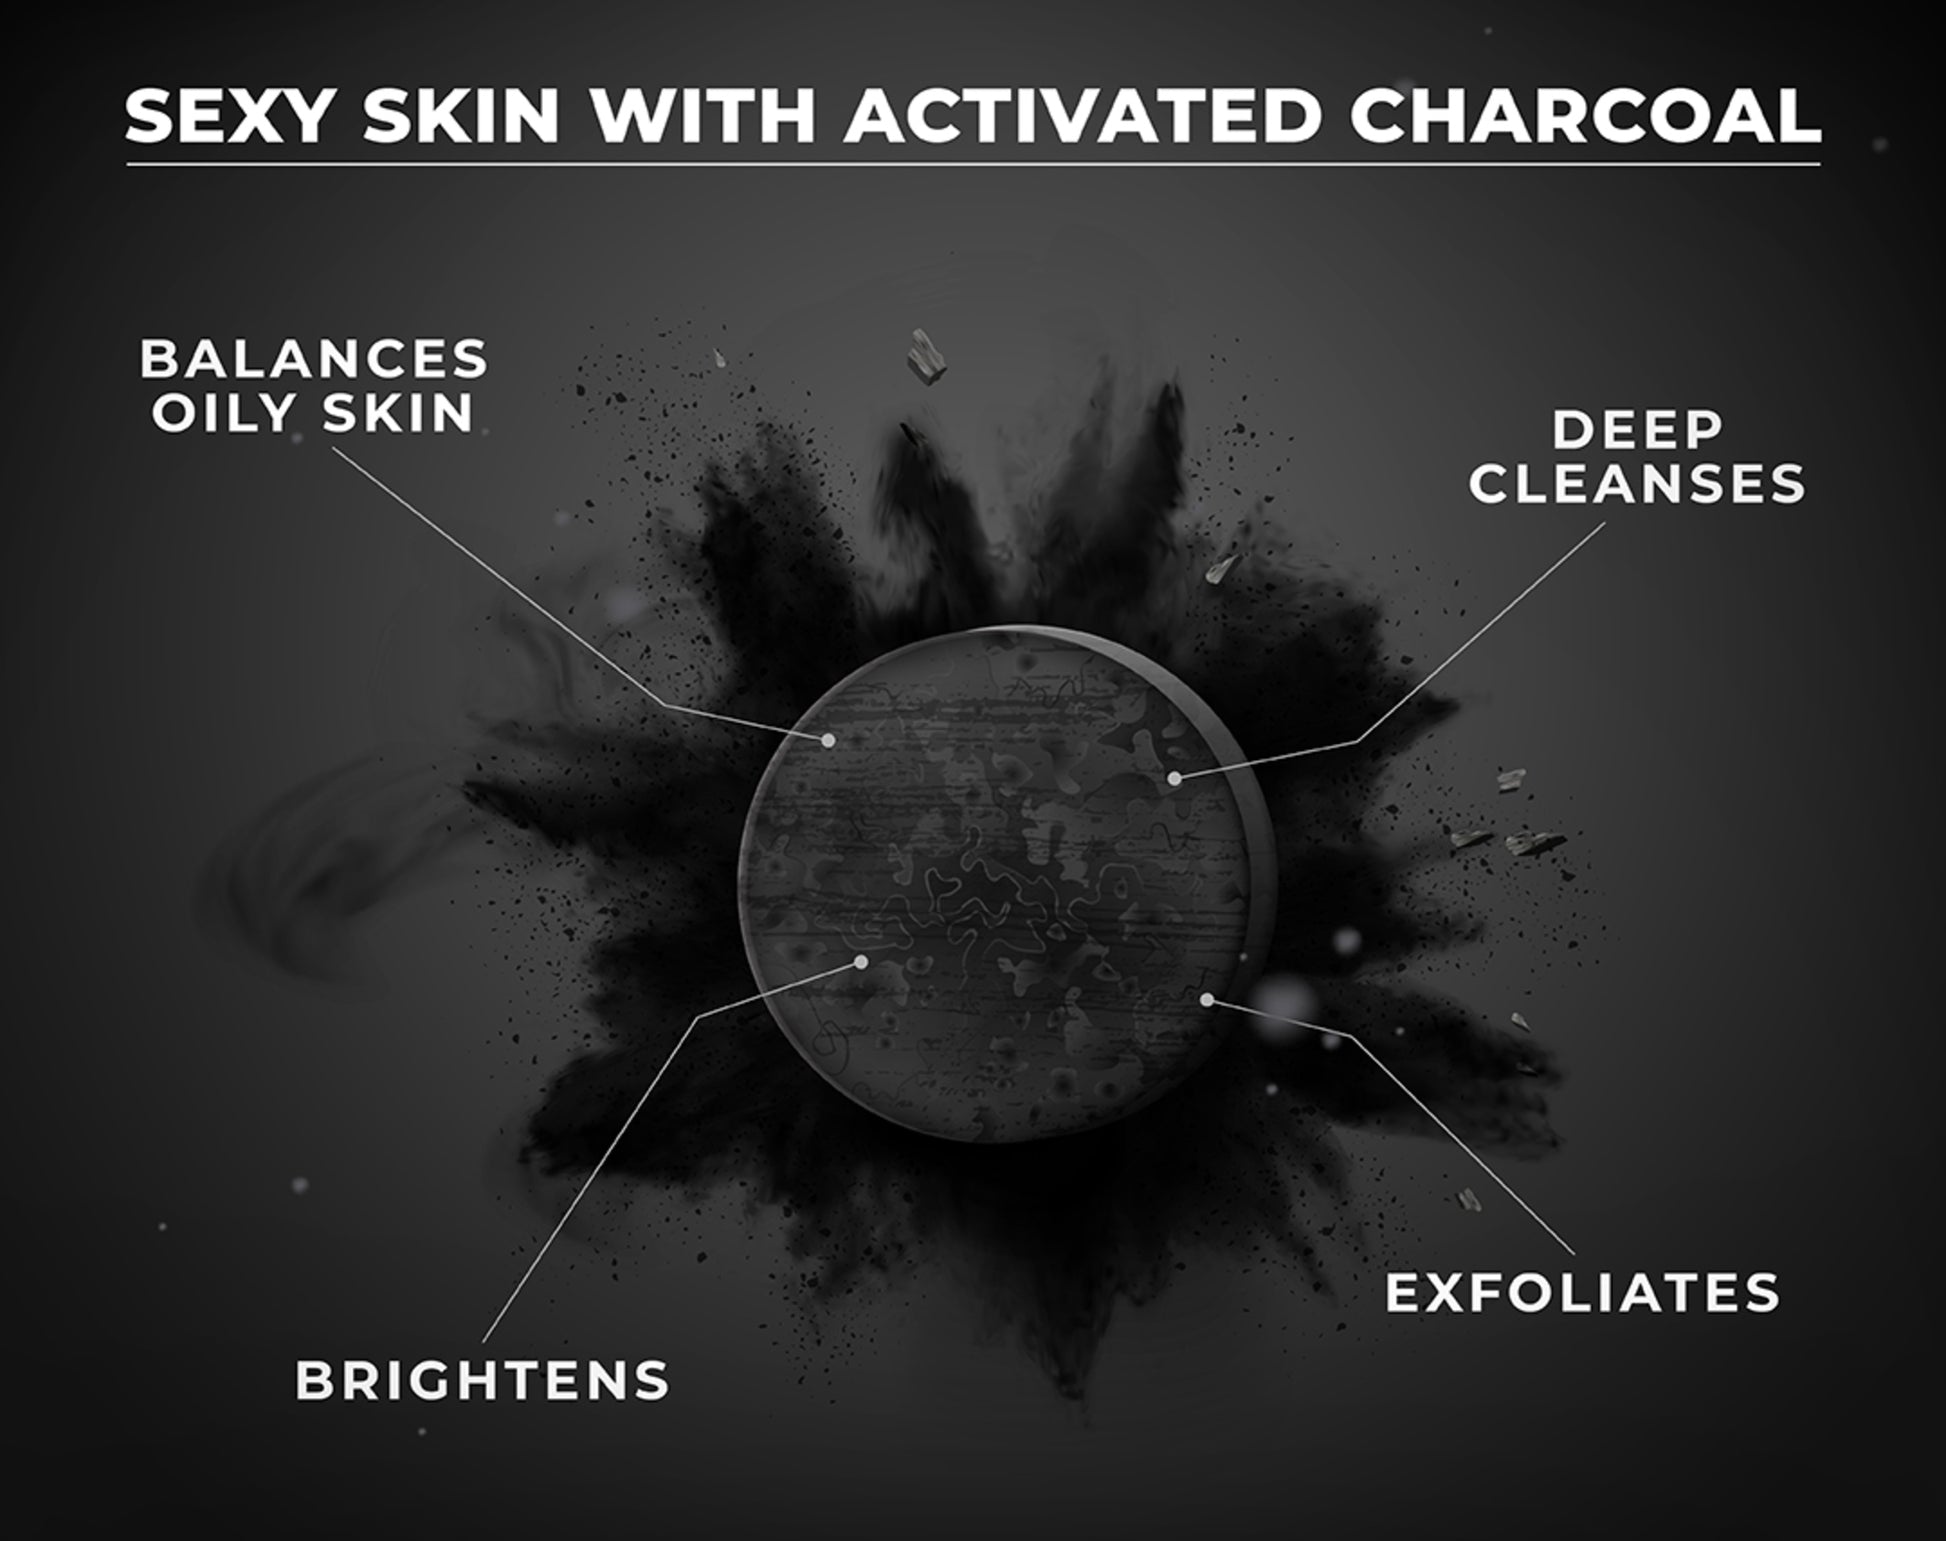 exfoliate skin, brightens skin, deep cleansing, oily skin